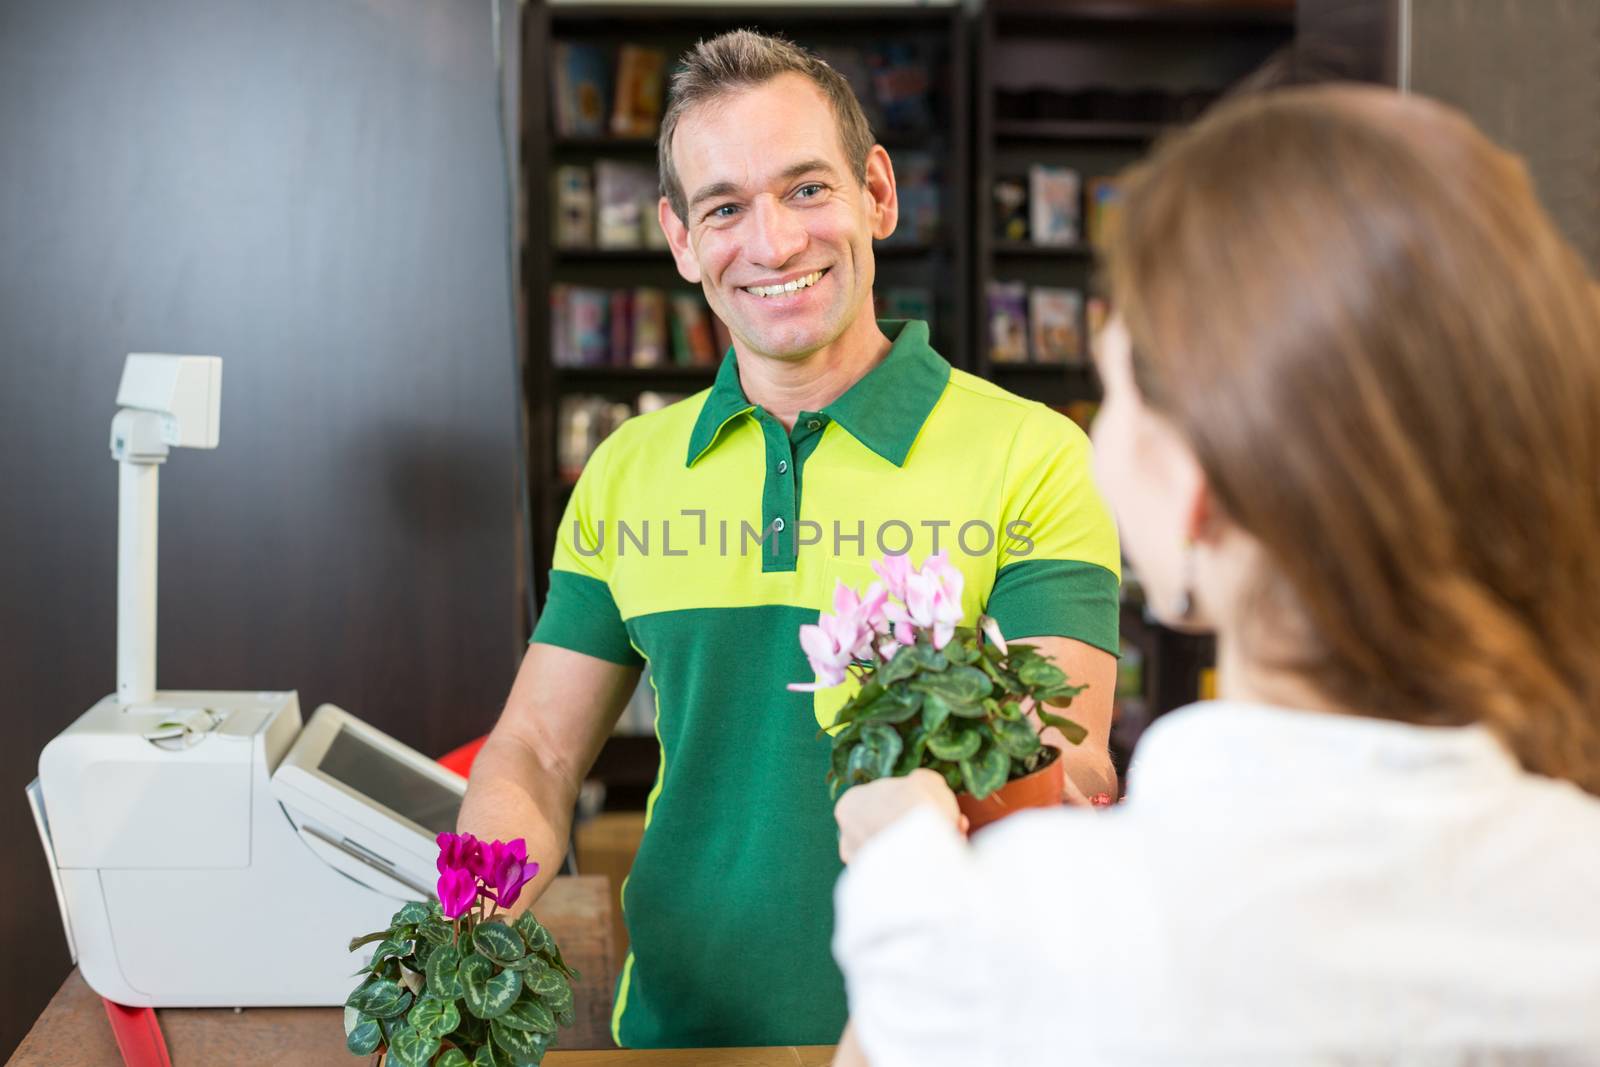 Cashier or shopkeeper in flower shop or retail store serving client by ikonoklast_fotografie